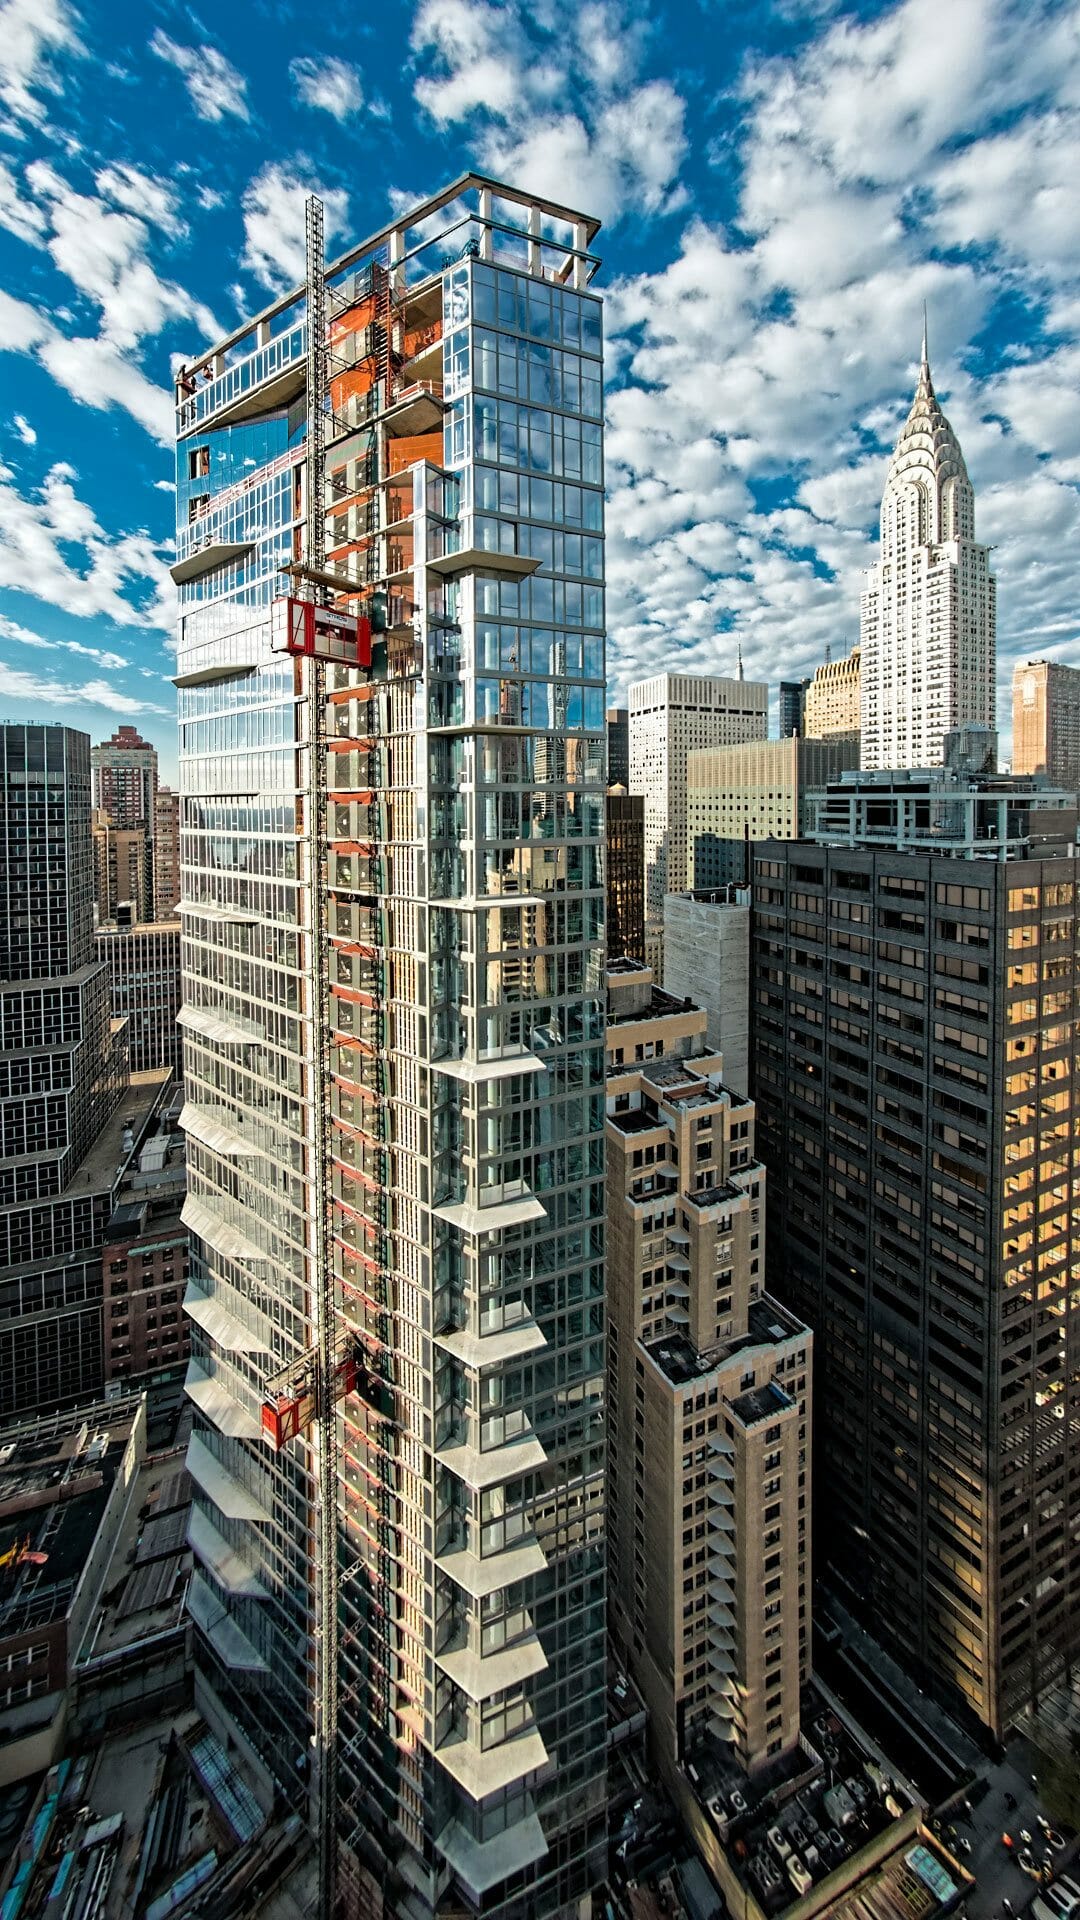 Manhattan residential skyscraper under construction